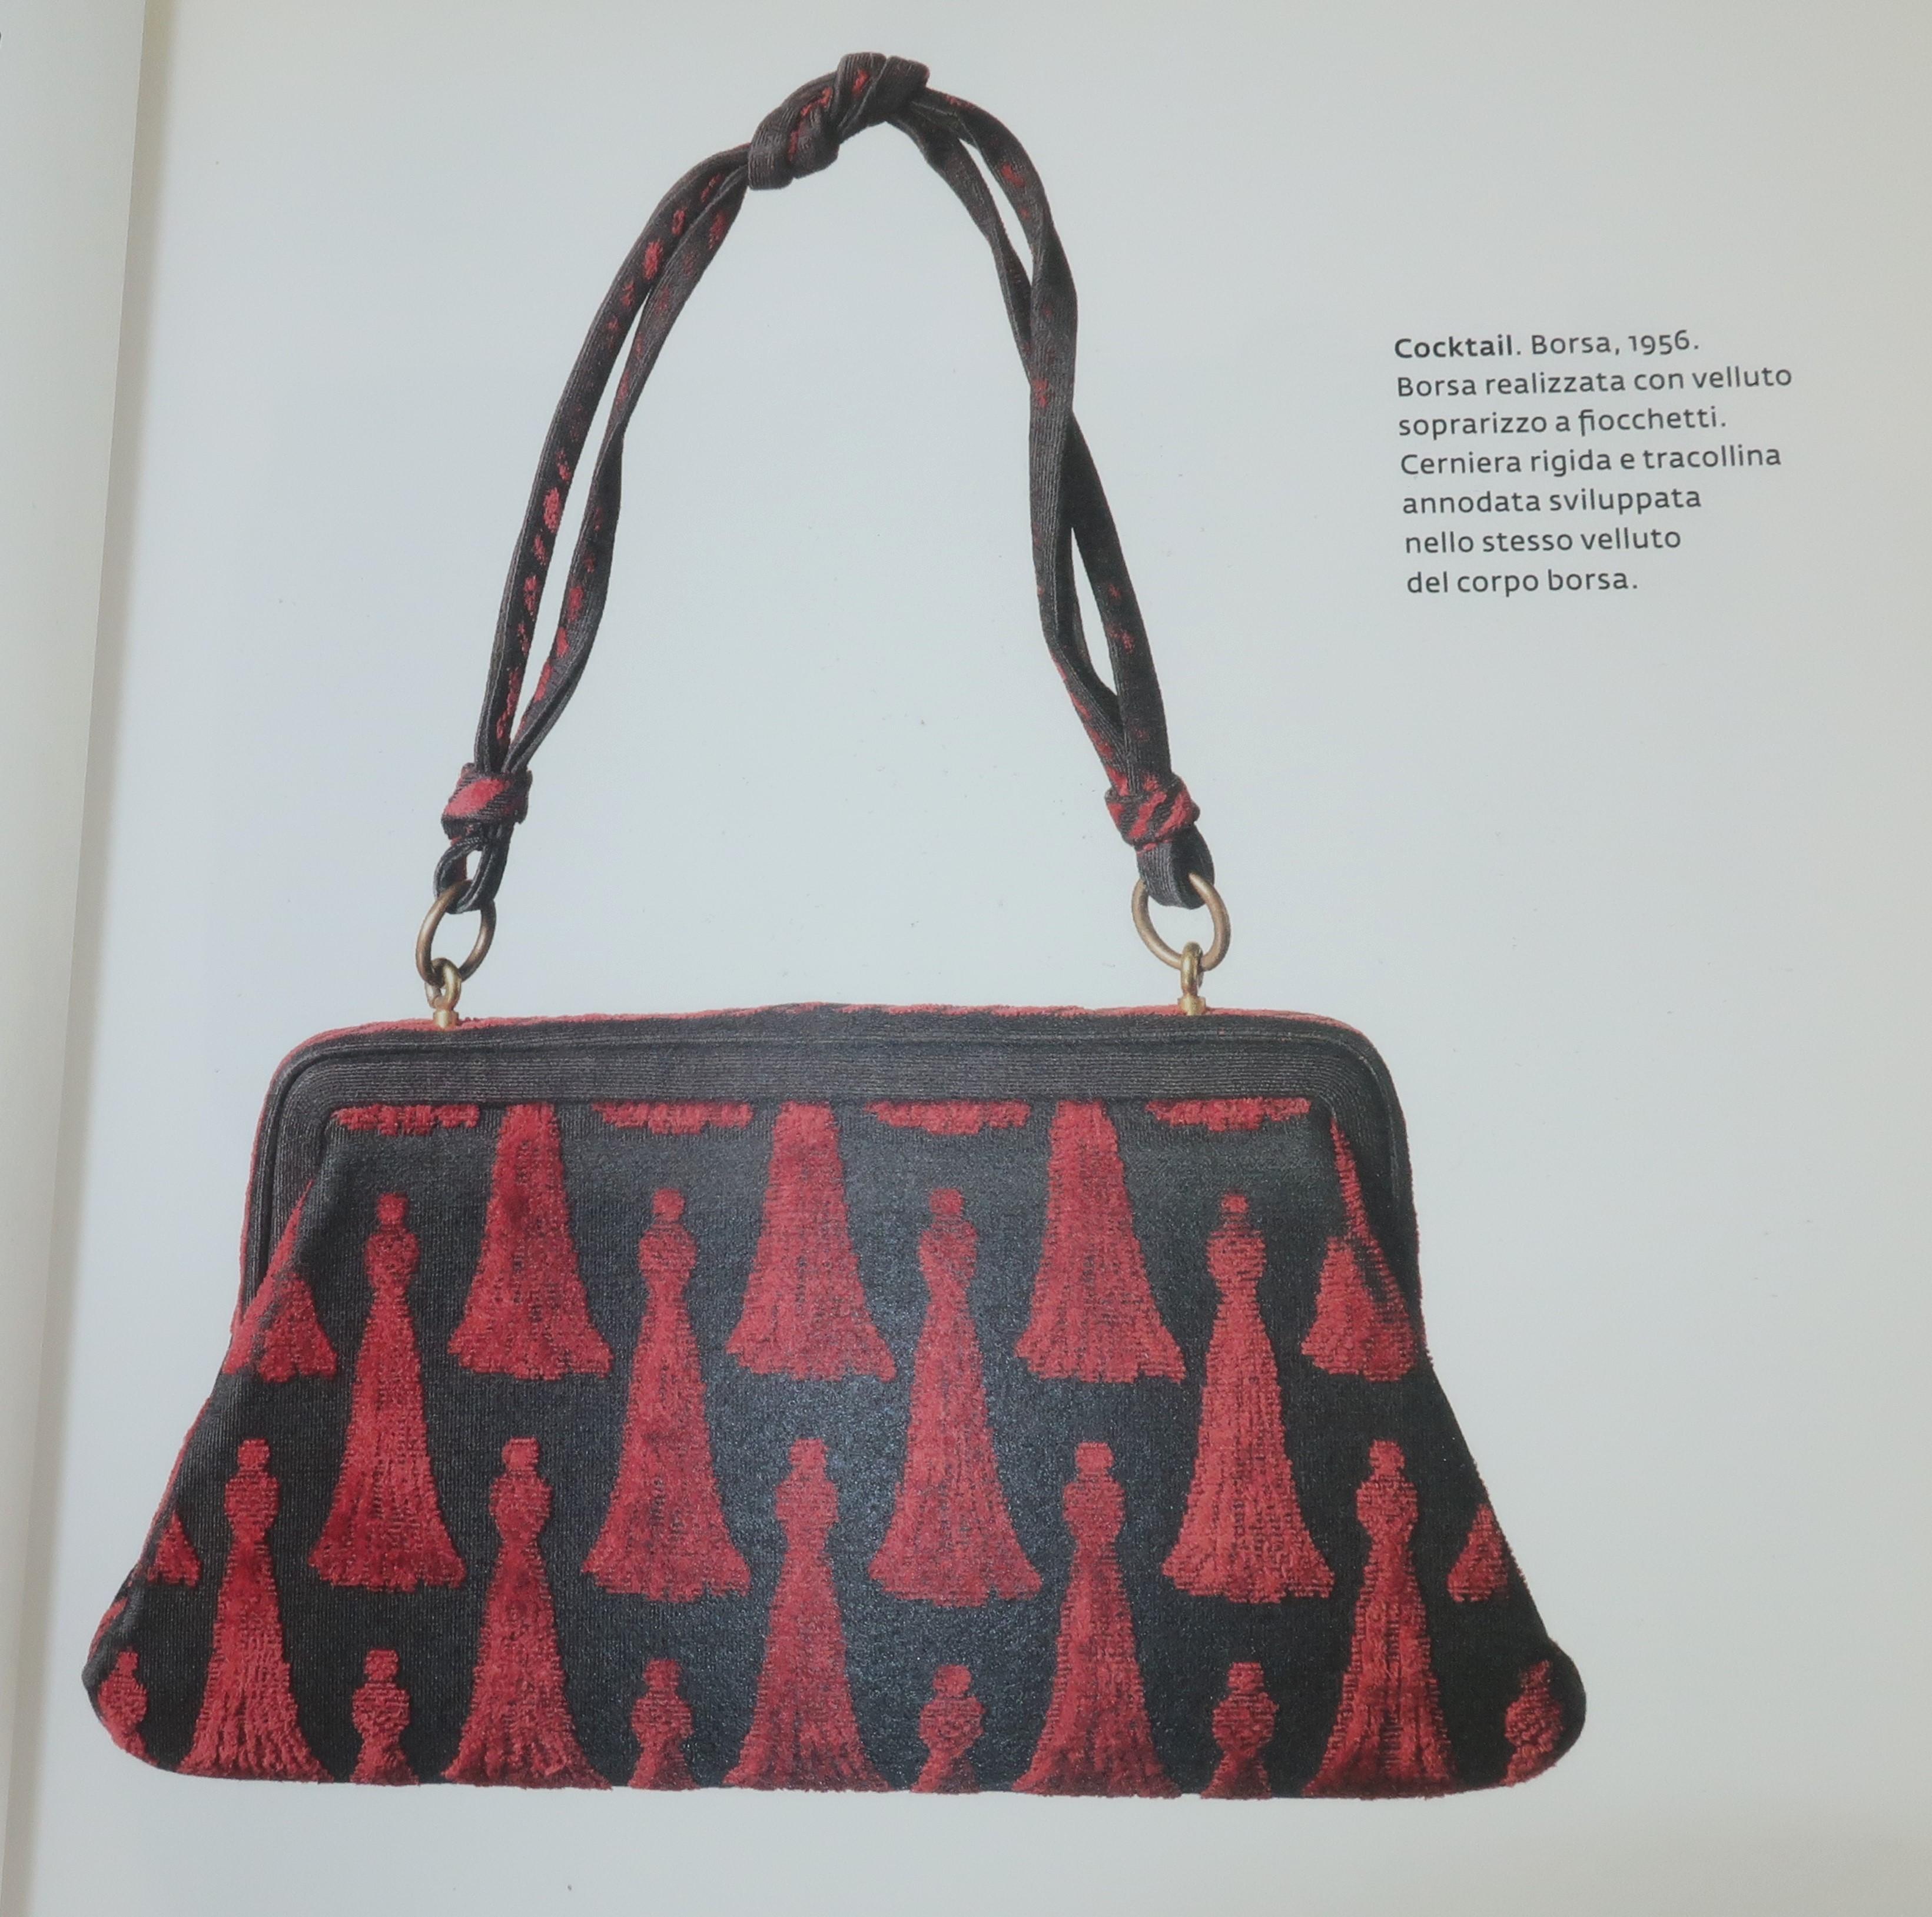 Roberta di Camerino Handbag Museum Exhibition Catalog Book, 2011 2